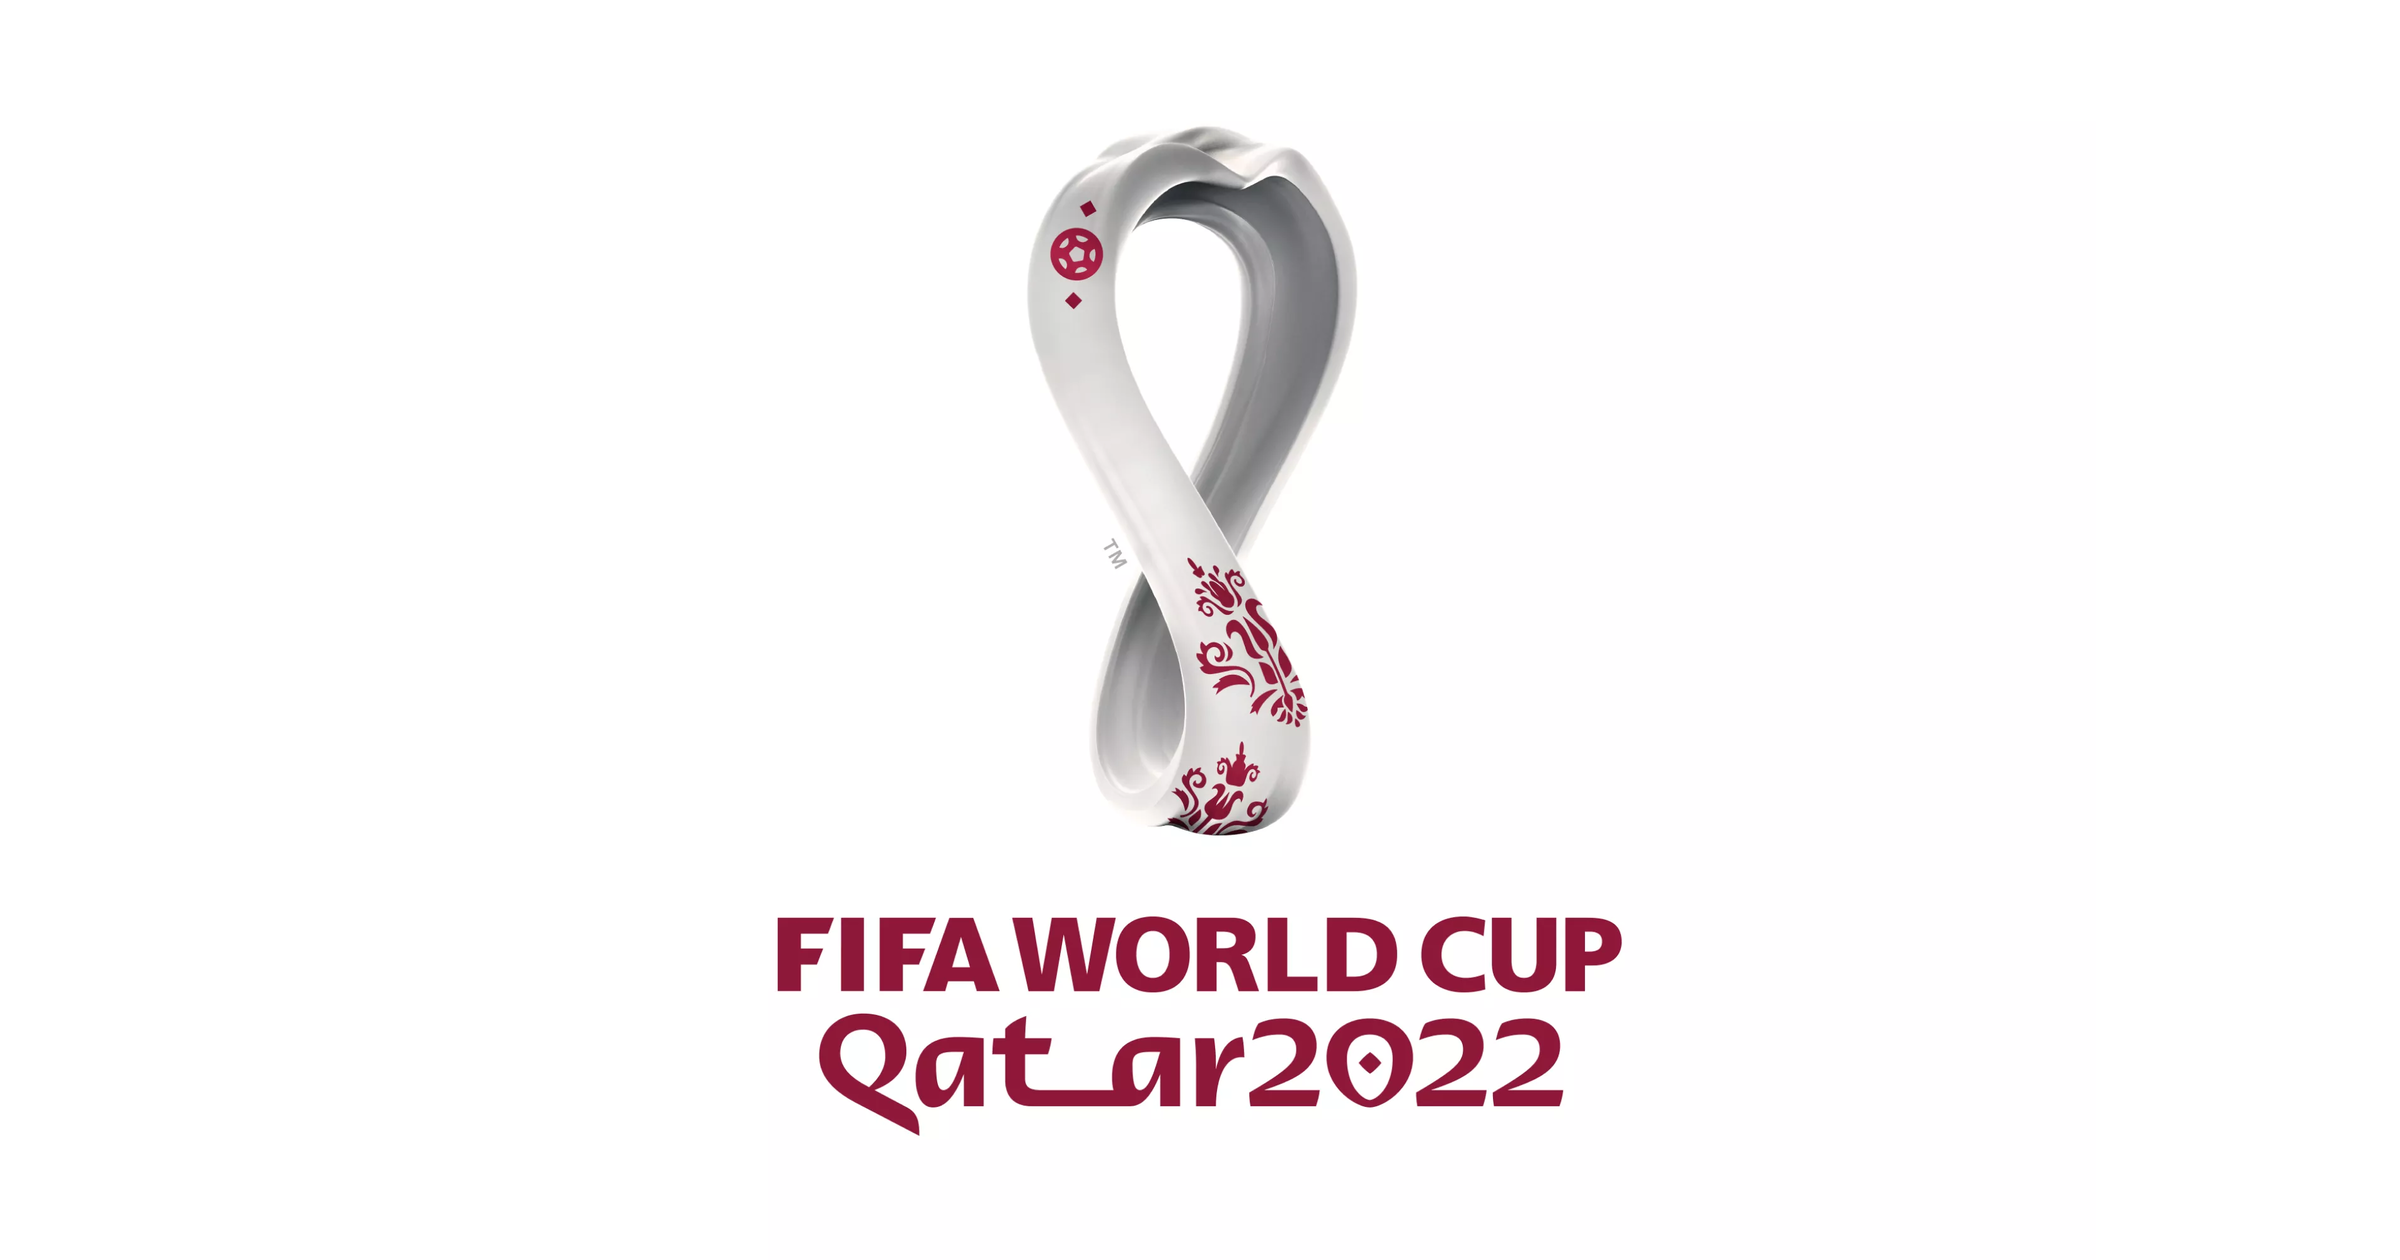 FIFA World Cup: 2022 Qatar